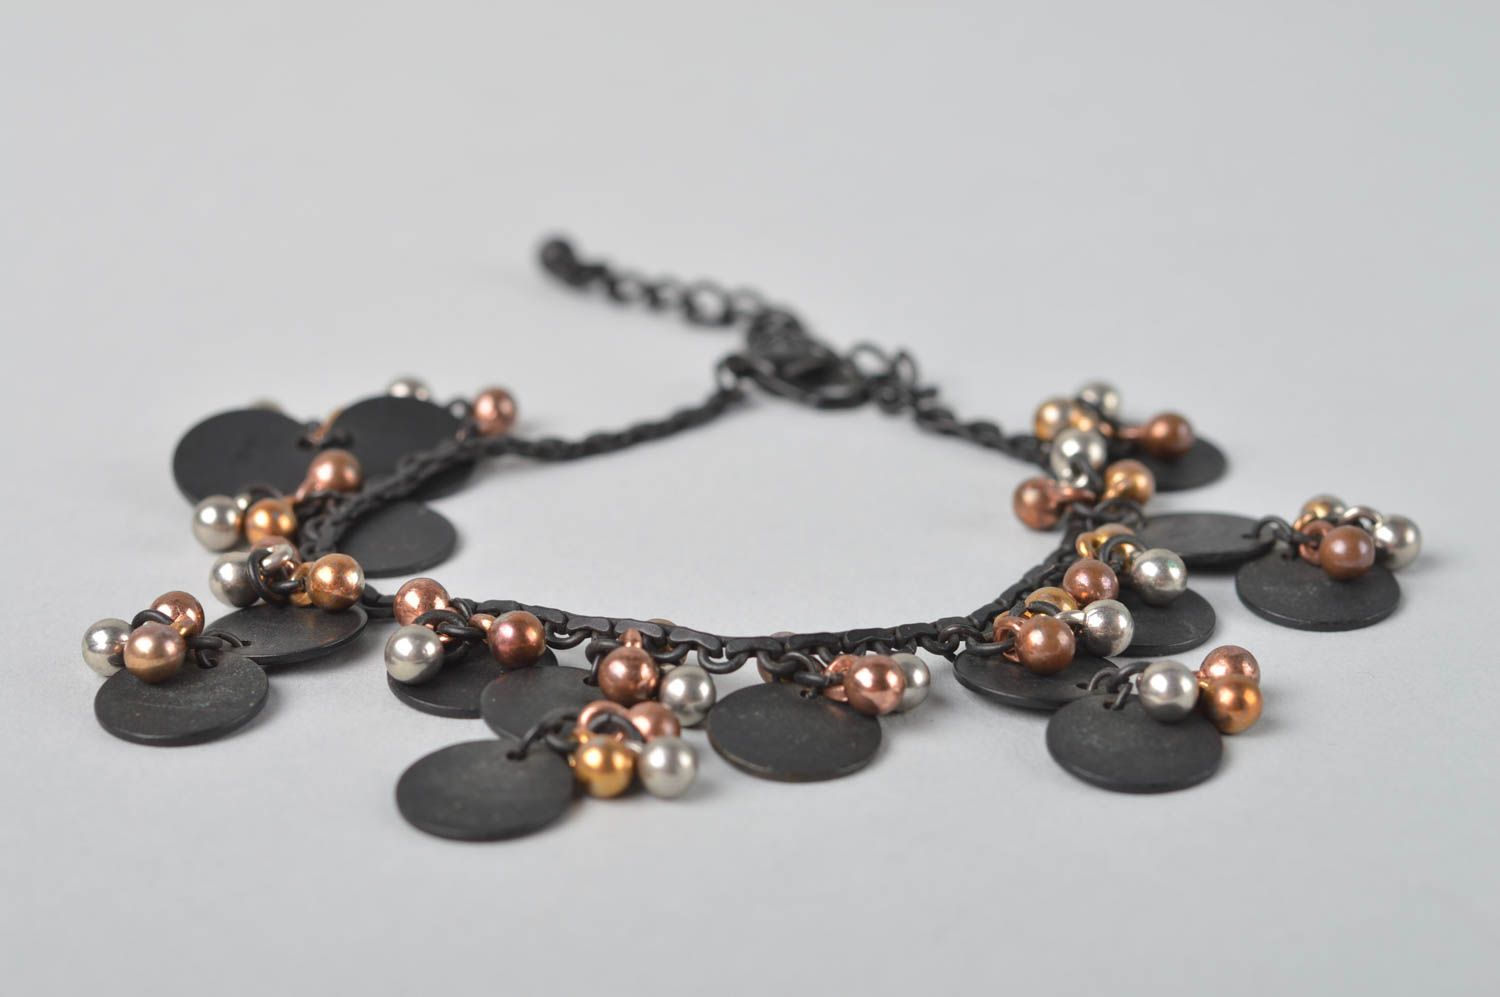 Handmade jewelry chain bracelet charm bracelet designer accessories gift ideas photo 4